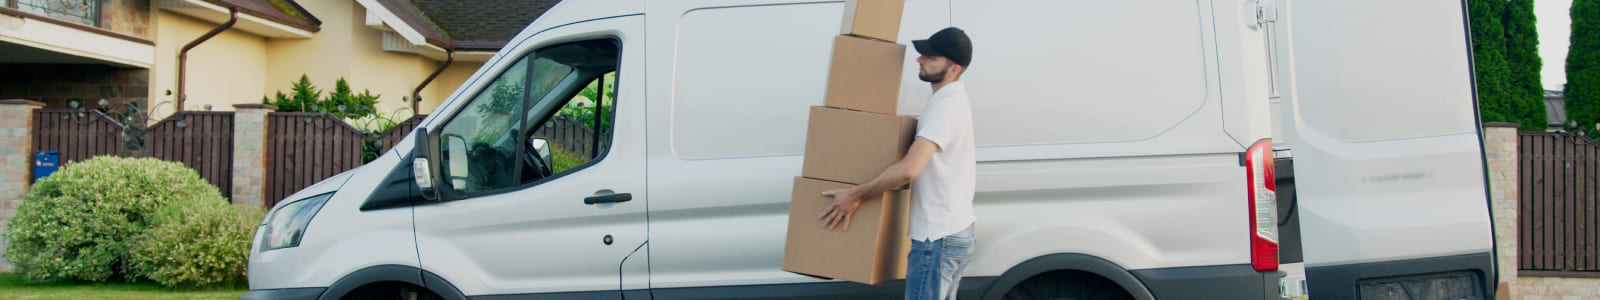 Man carrying boxes near van